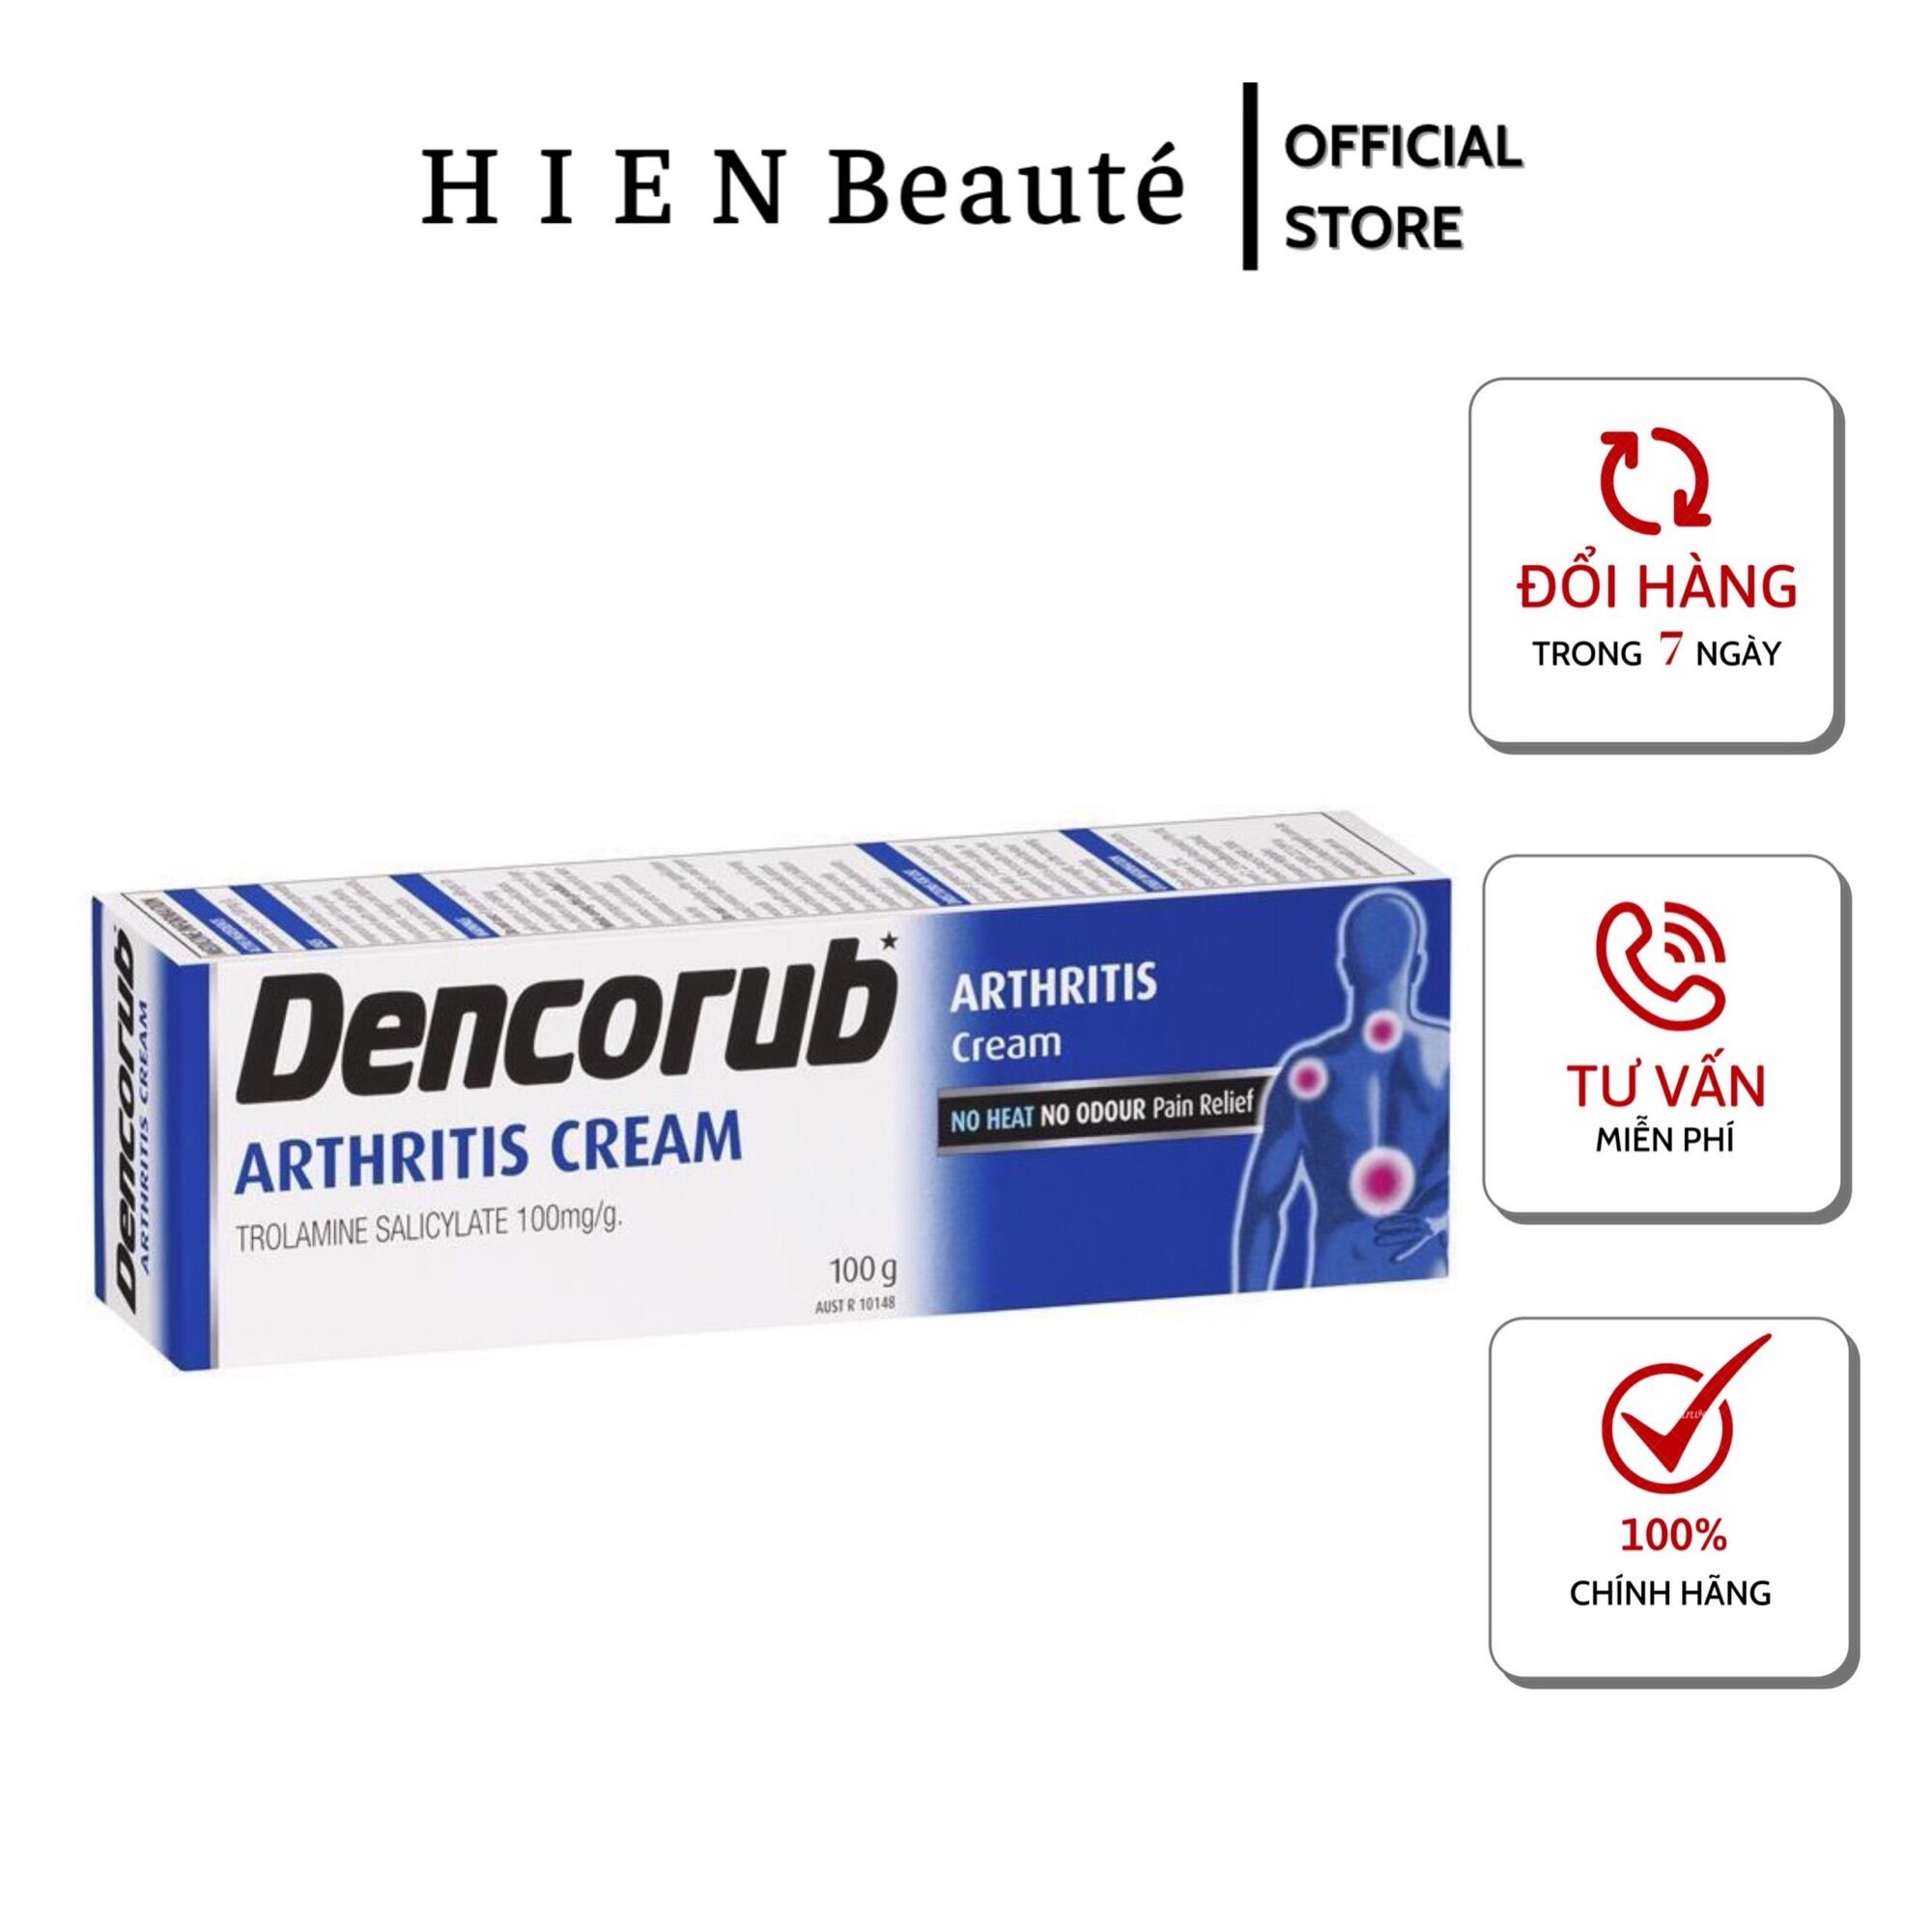 Dầu Xoa Bóp Dencorub Arthritis Cream 100g - Úc